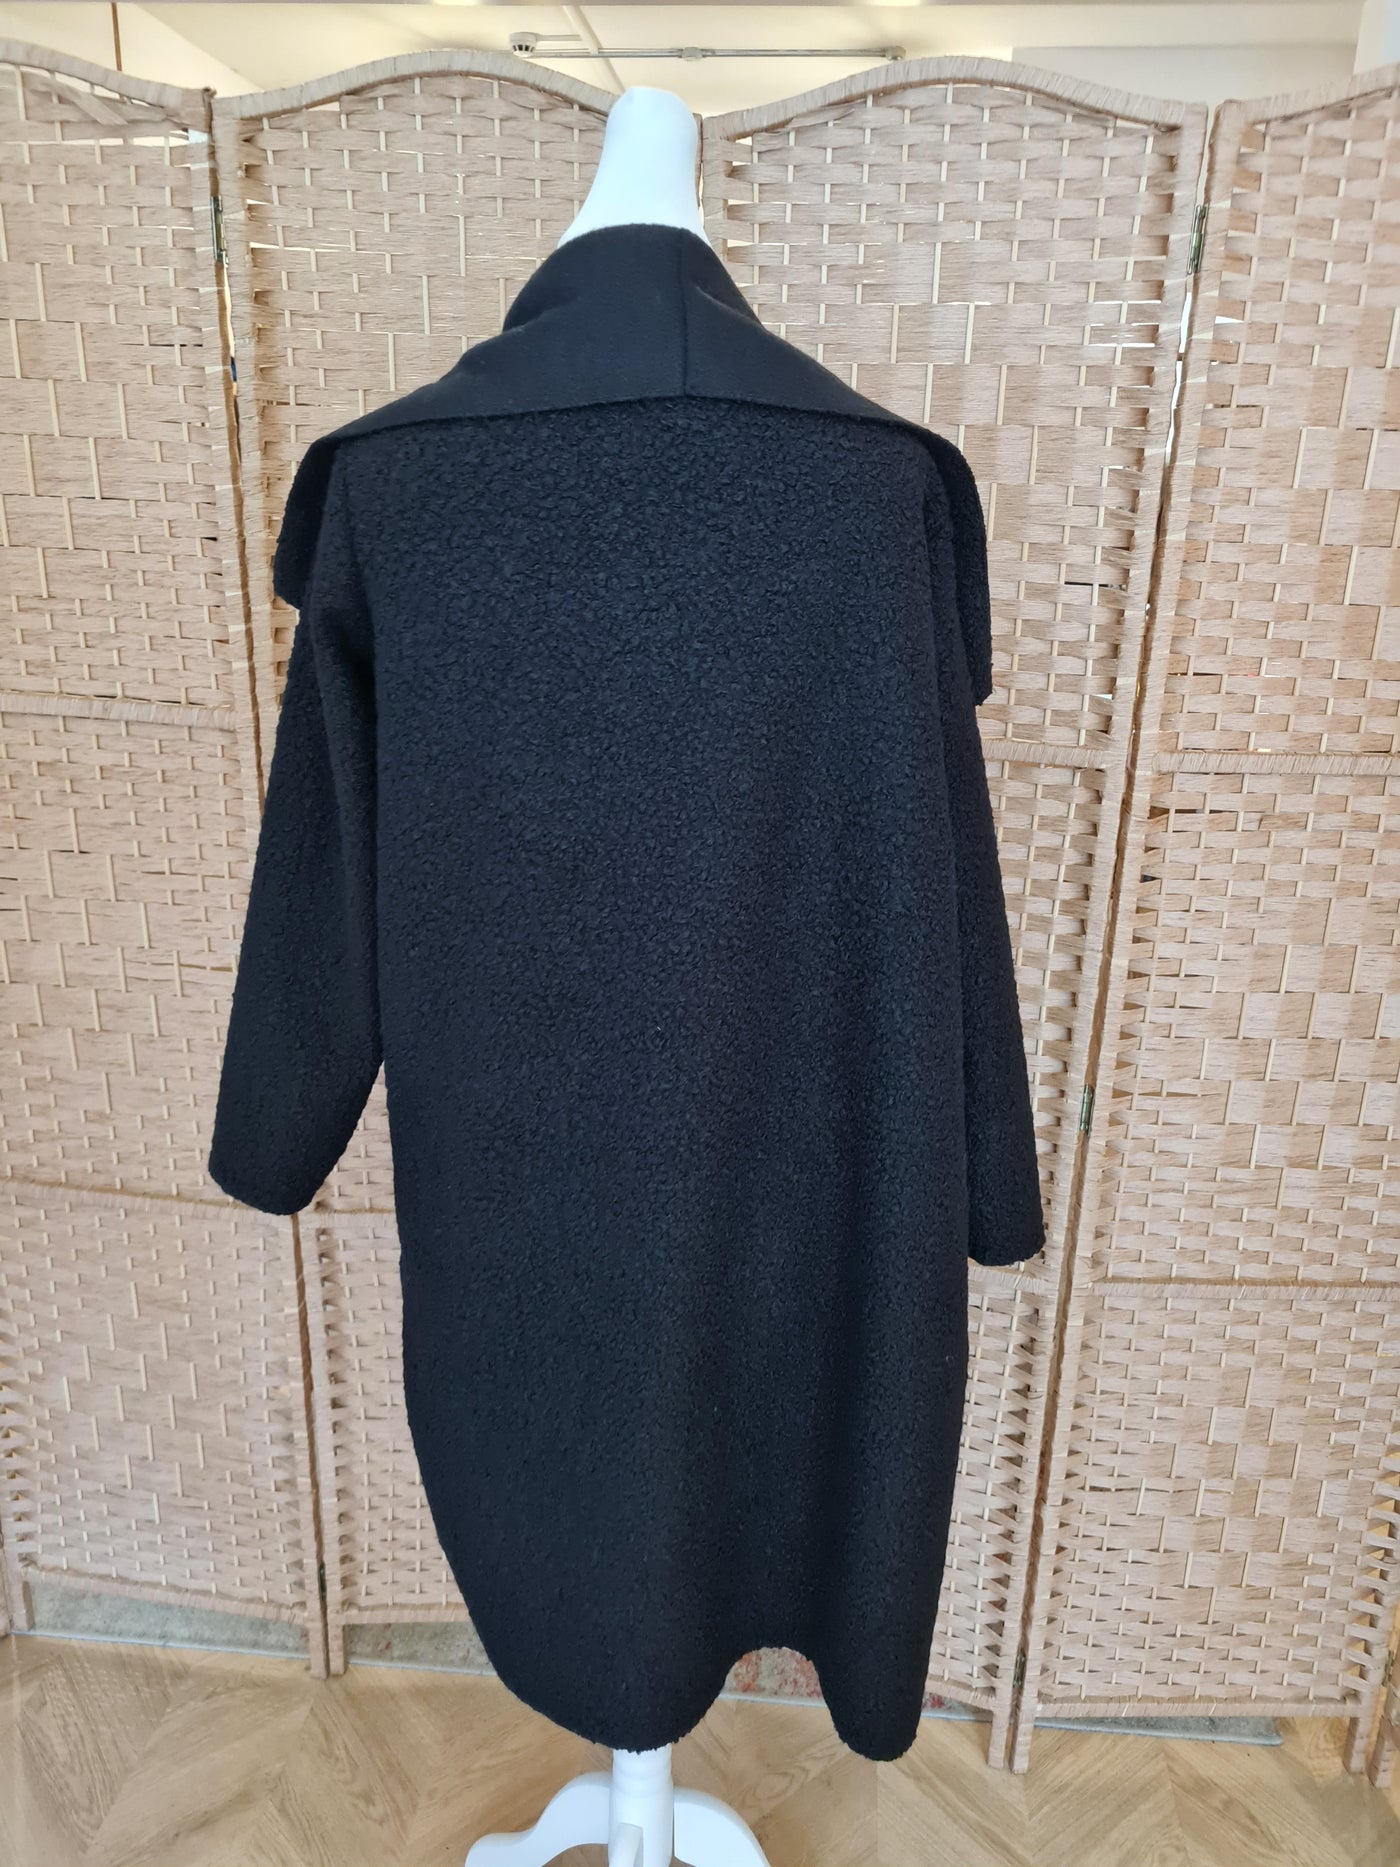 Boucle coat in black